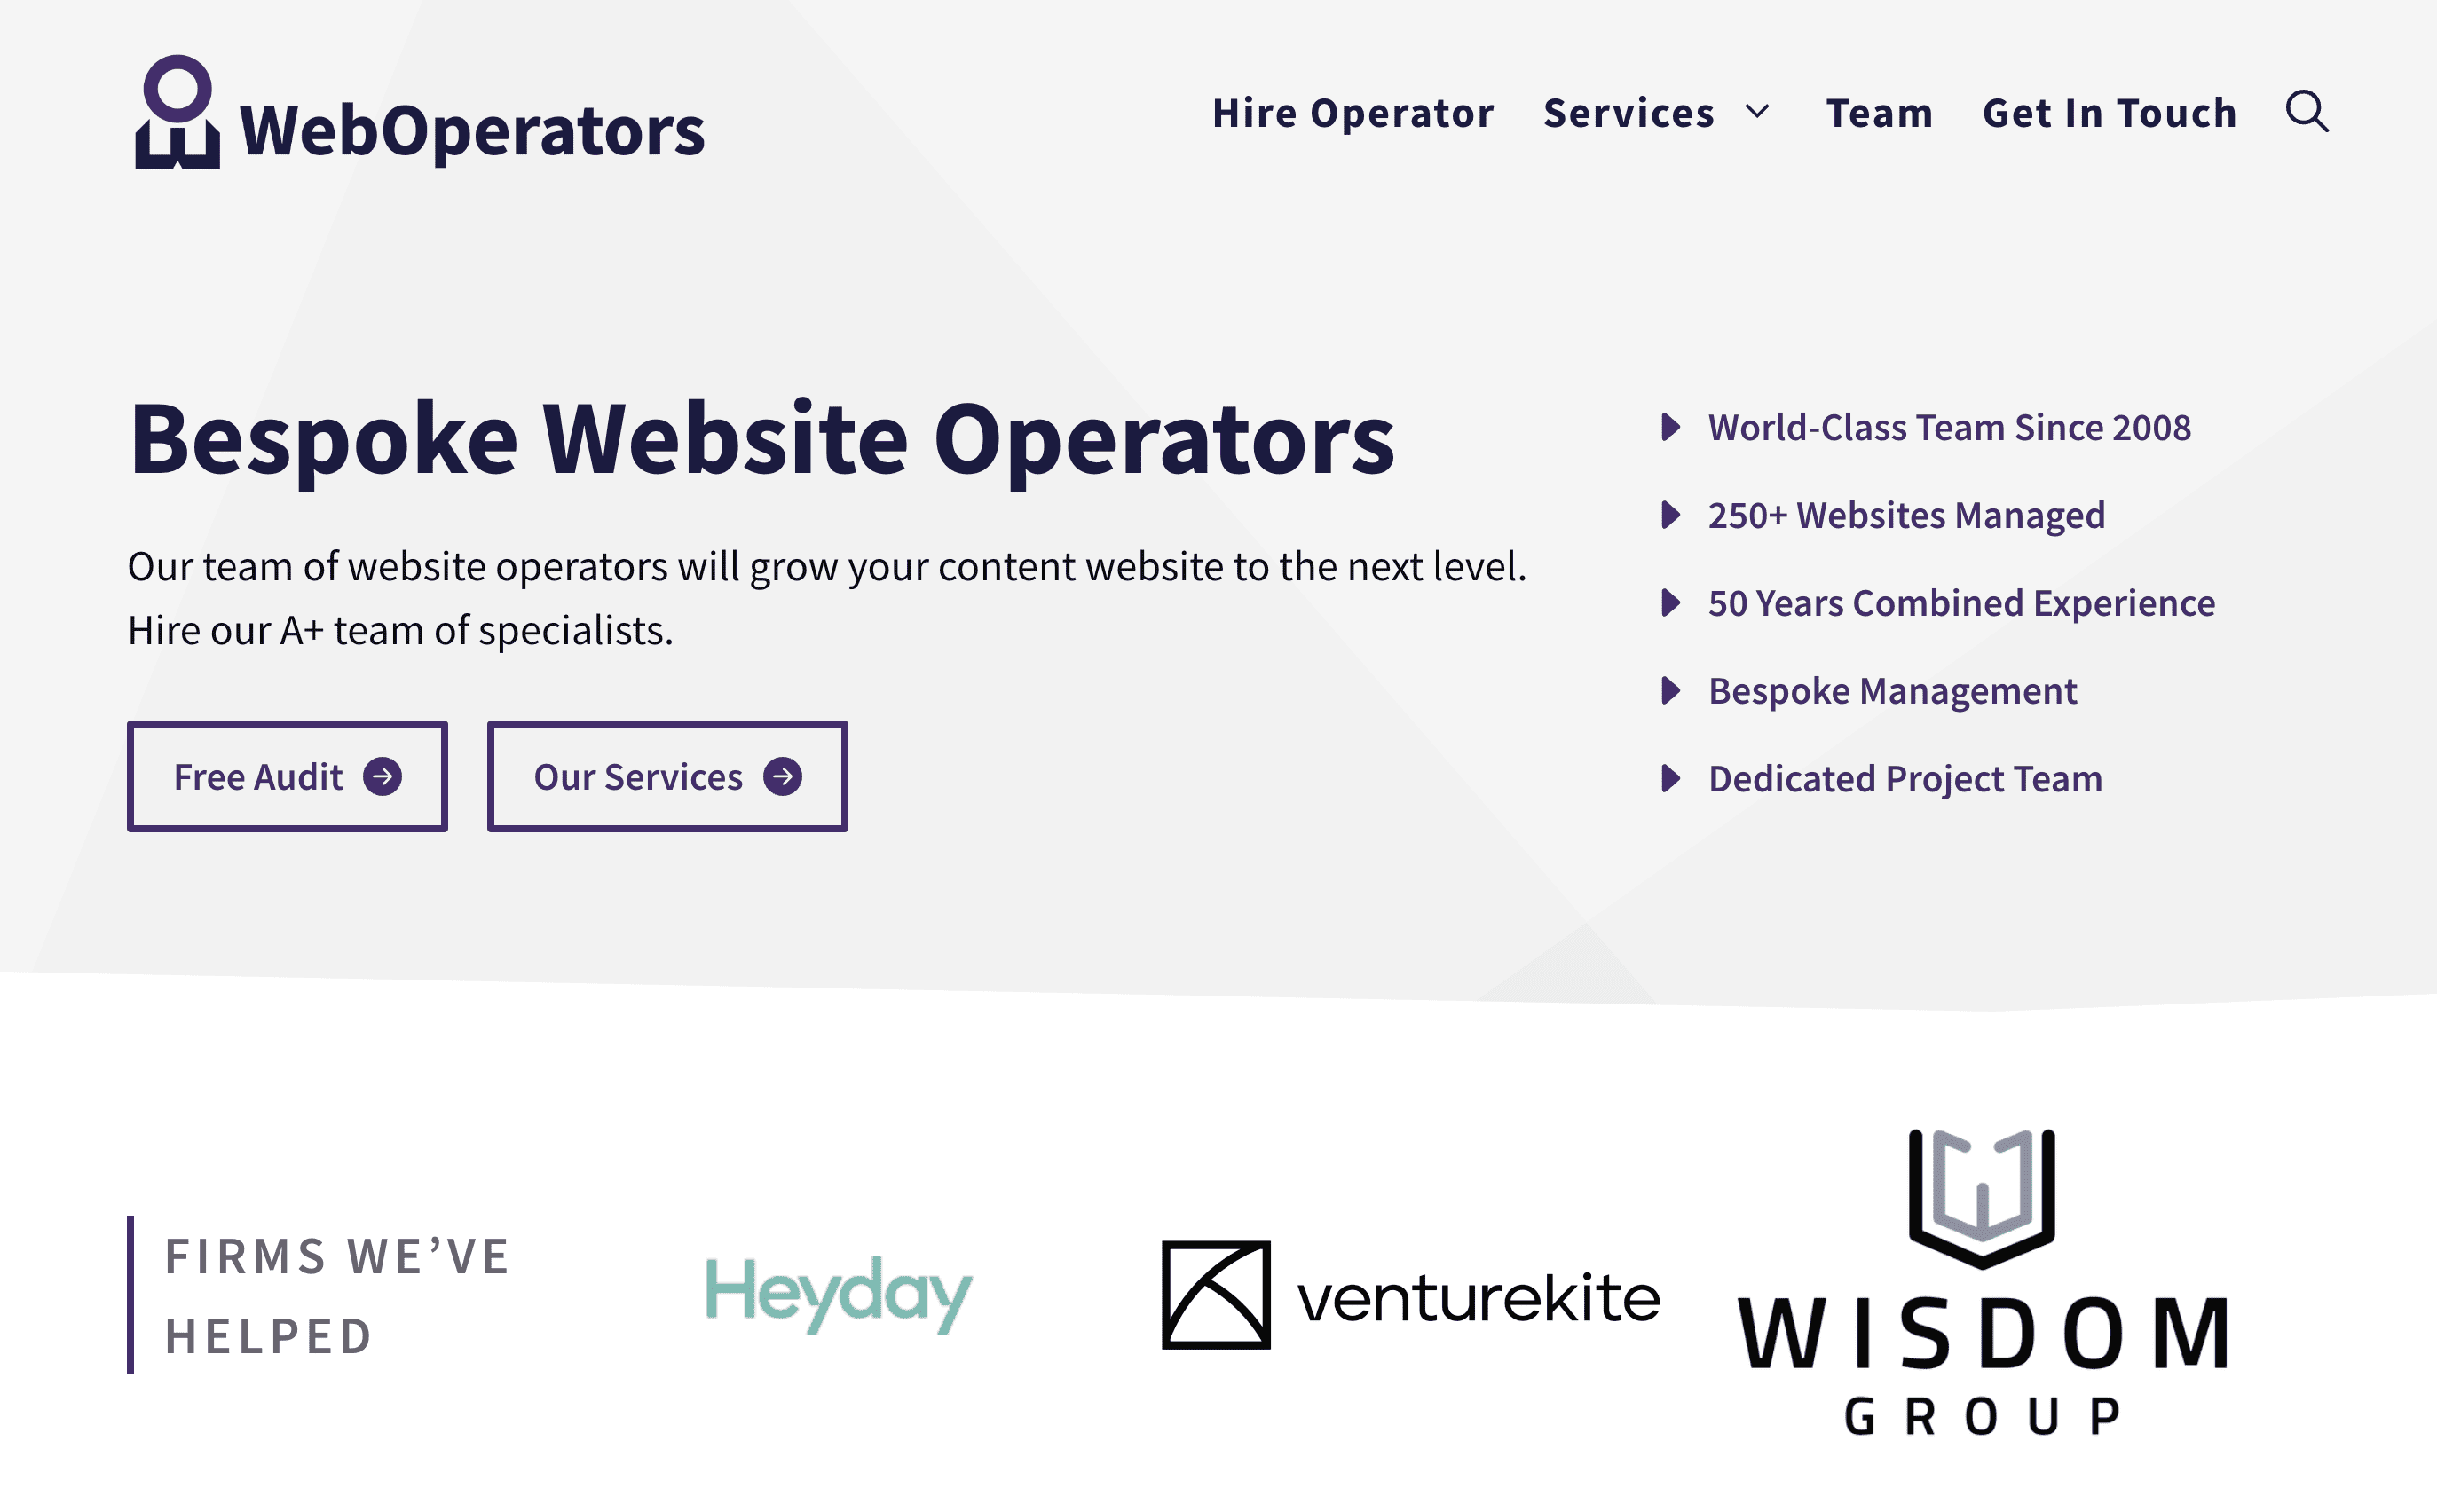 WebOperators